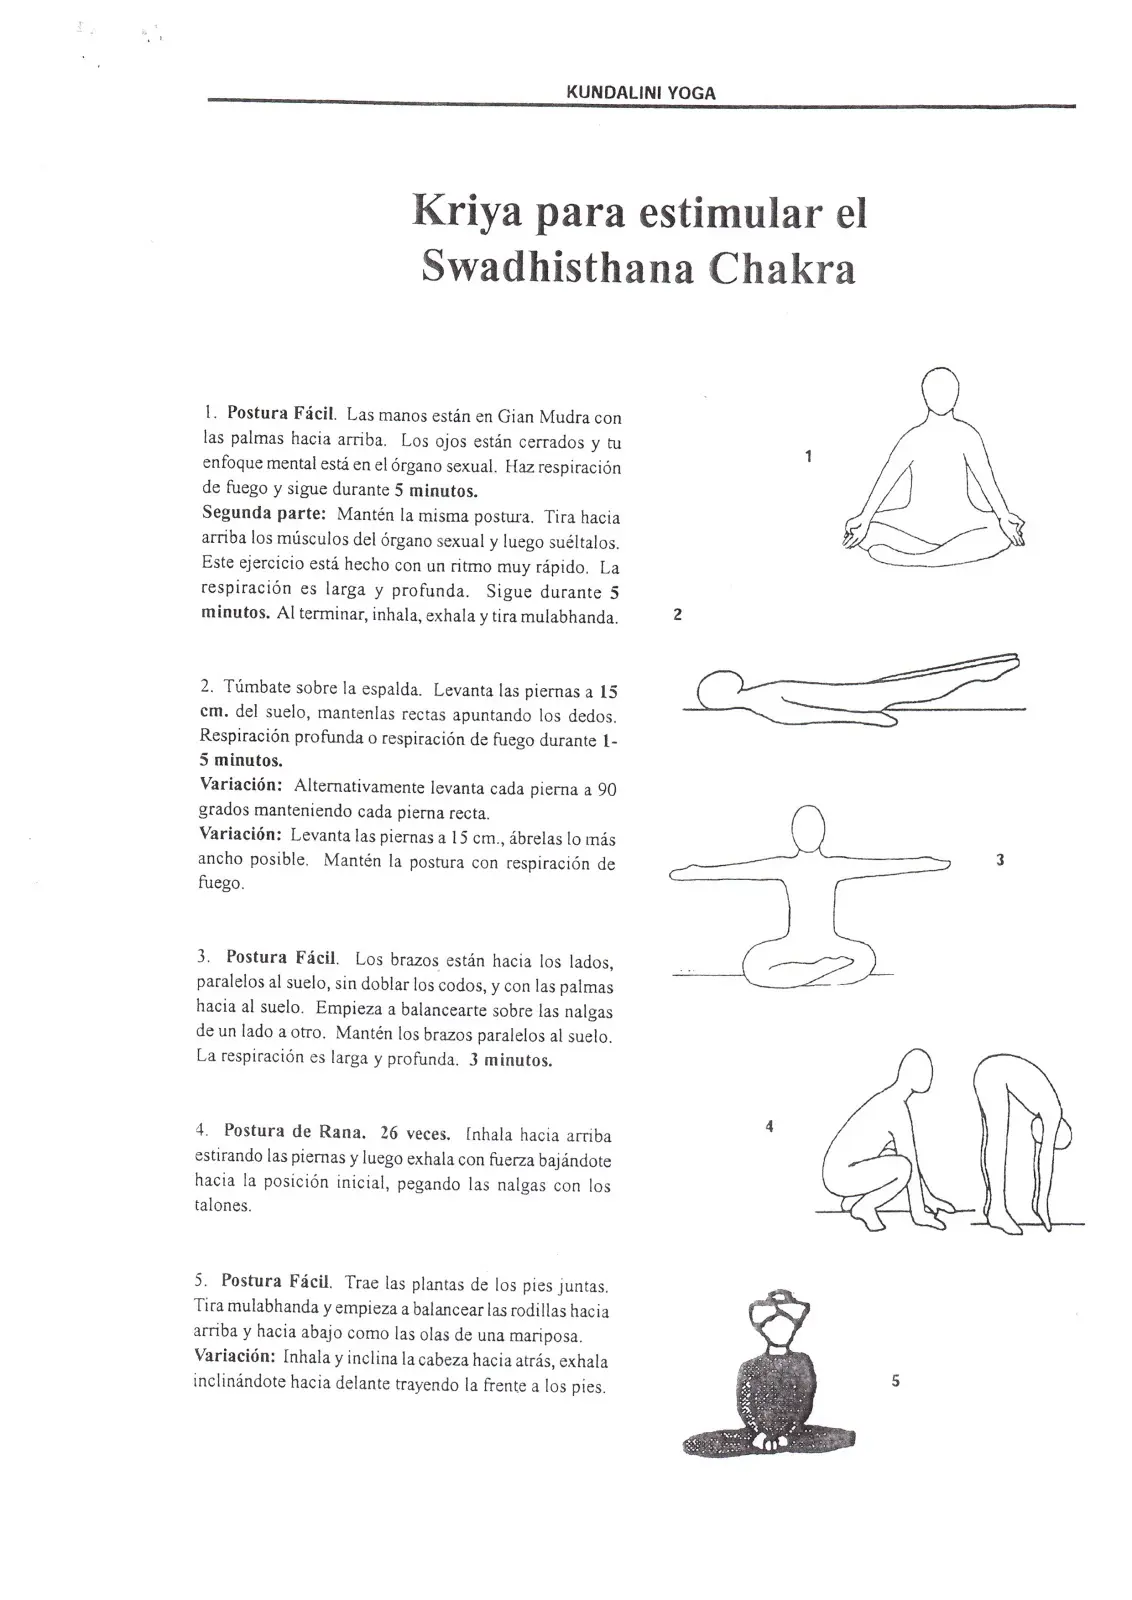 segundo chakra kundalini yoga - Cómo activar el segundo chakra